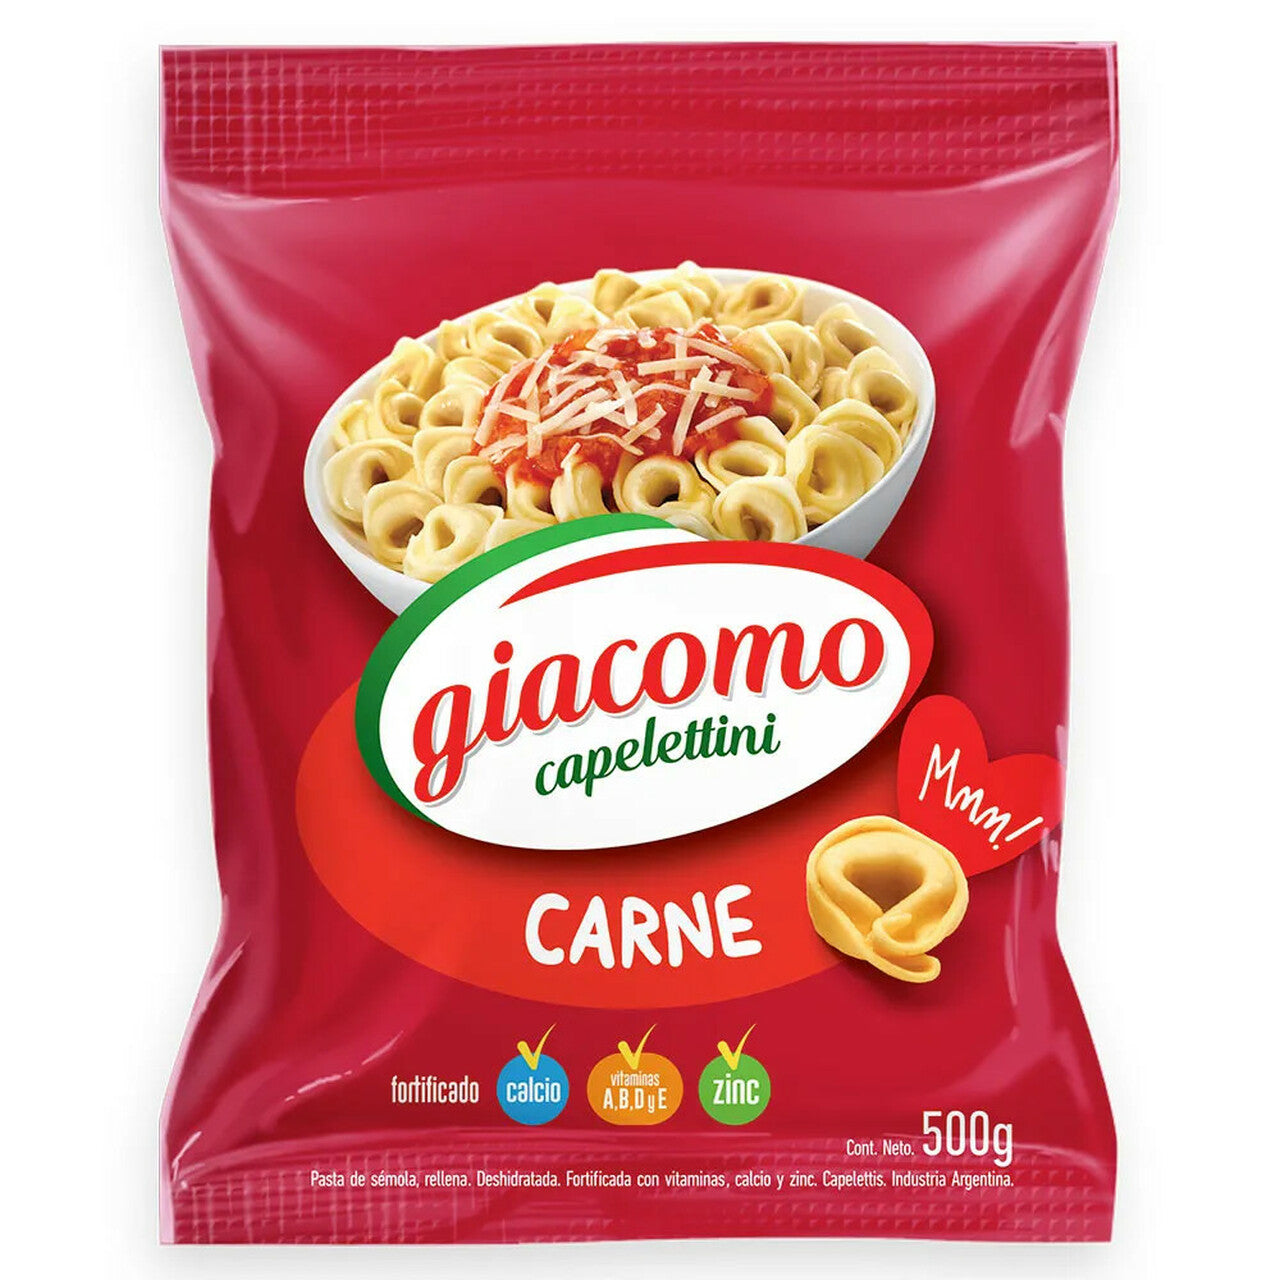 Capelettini Carne / Beef Dry pasta  GIACOMO  - ( 500 gr 1.1 Lb)